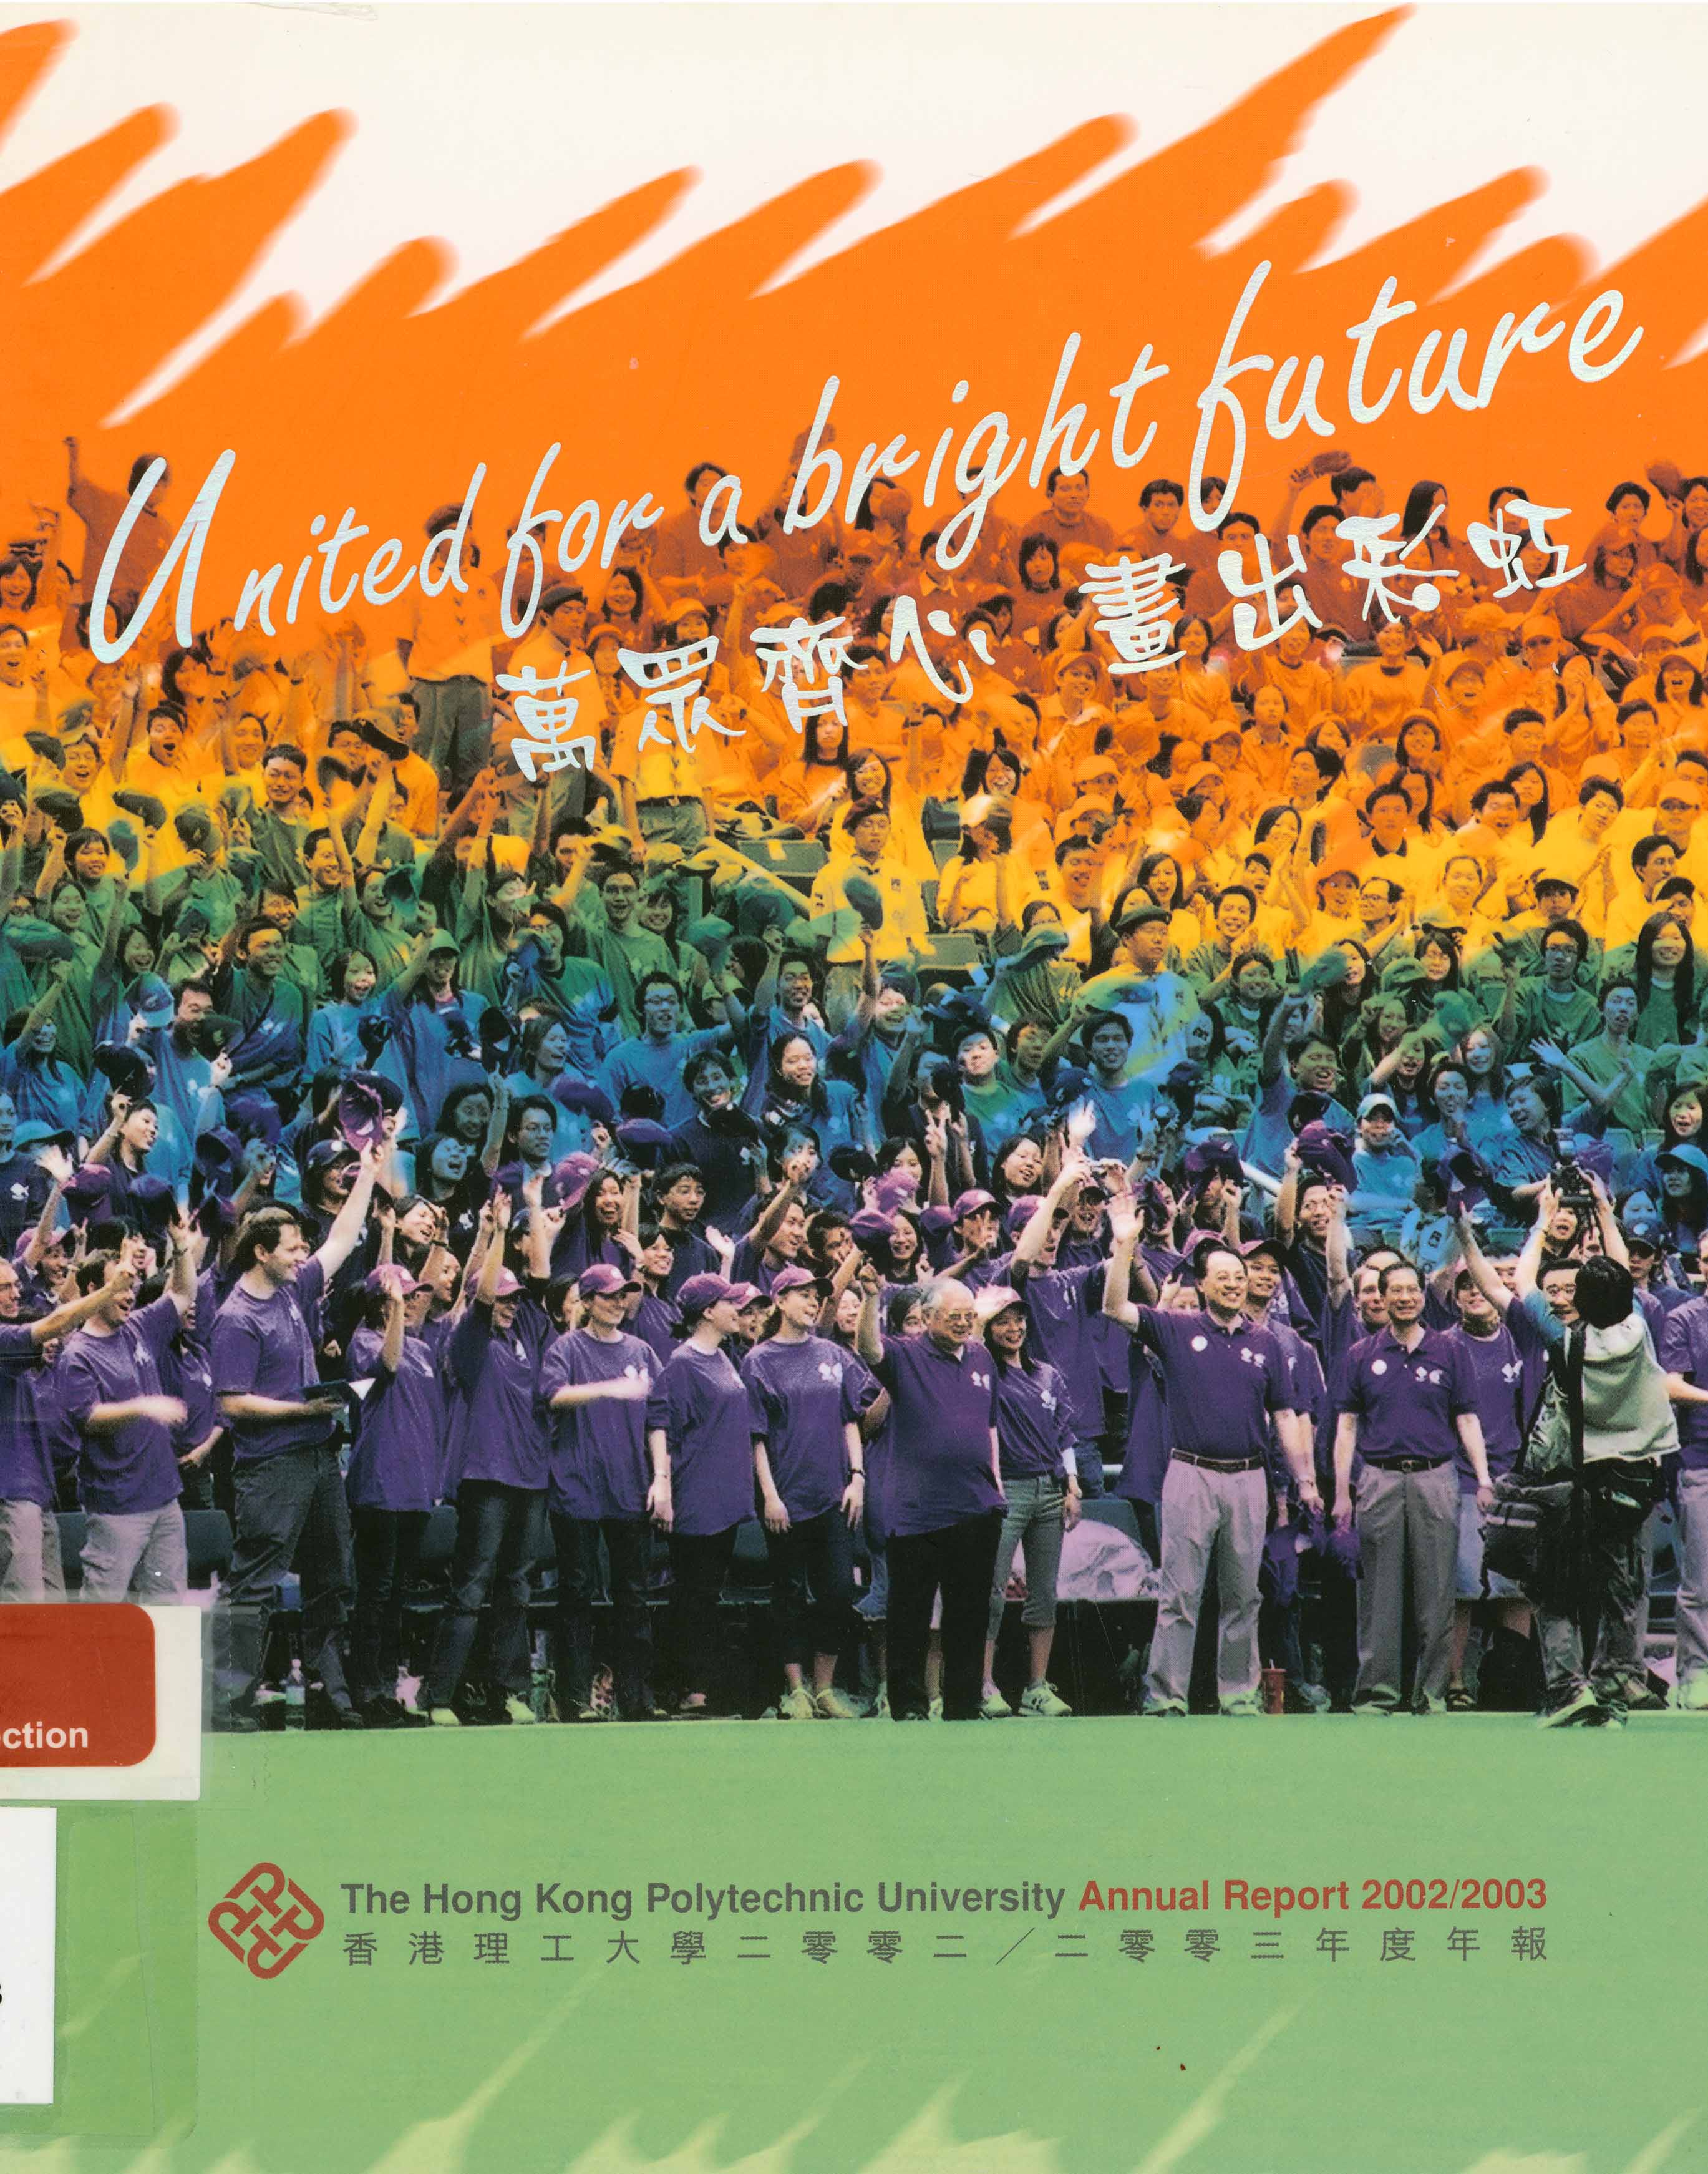 The Hong Kong Polytechnic University Annual Report 2002/03 